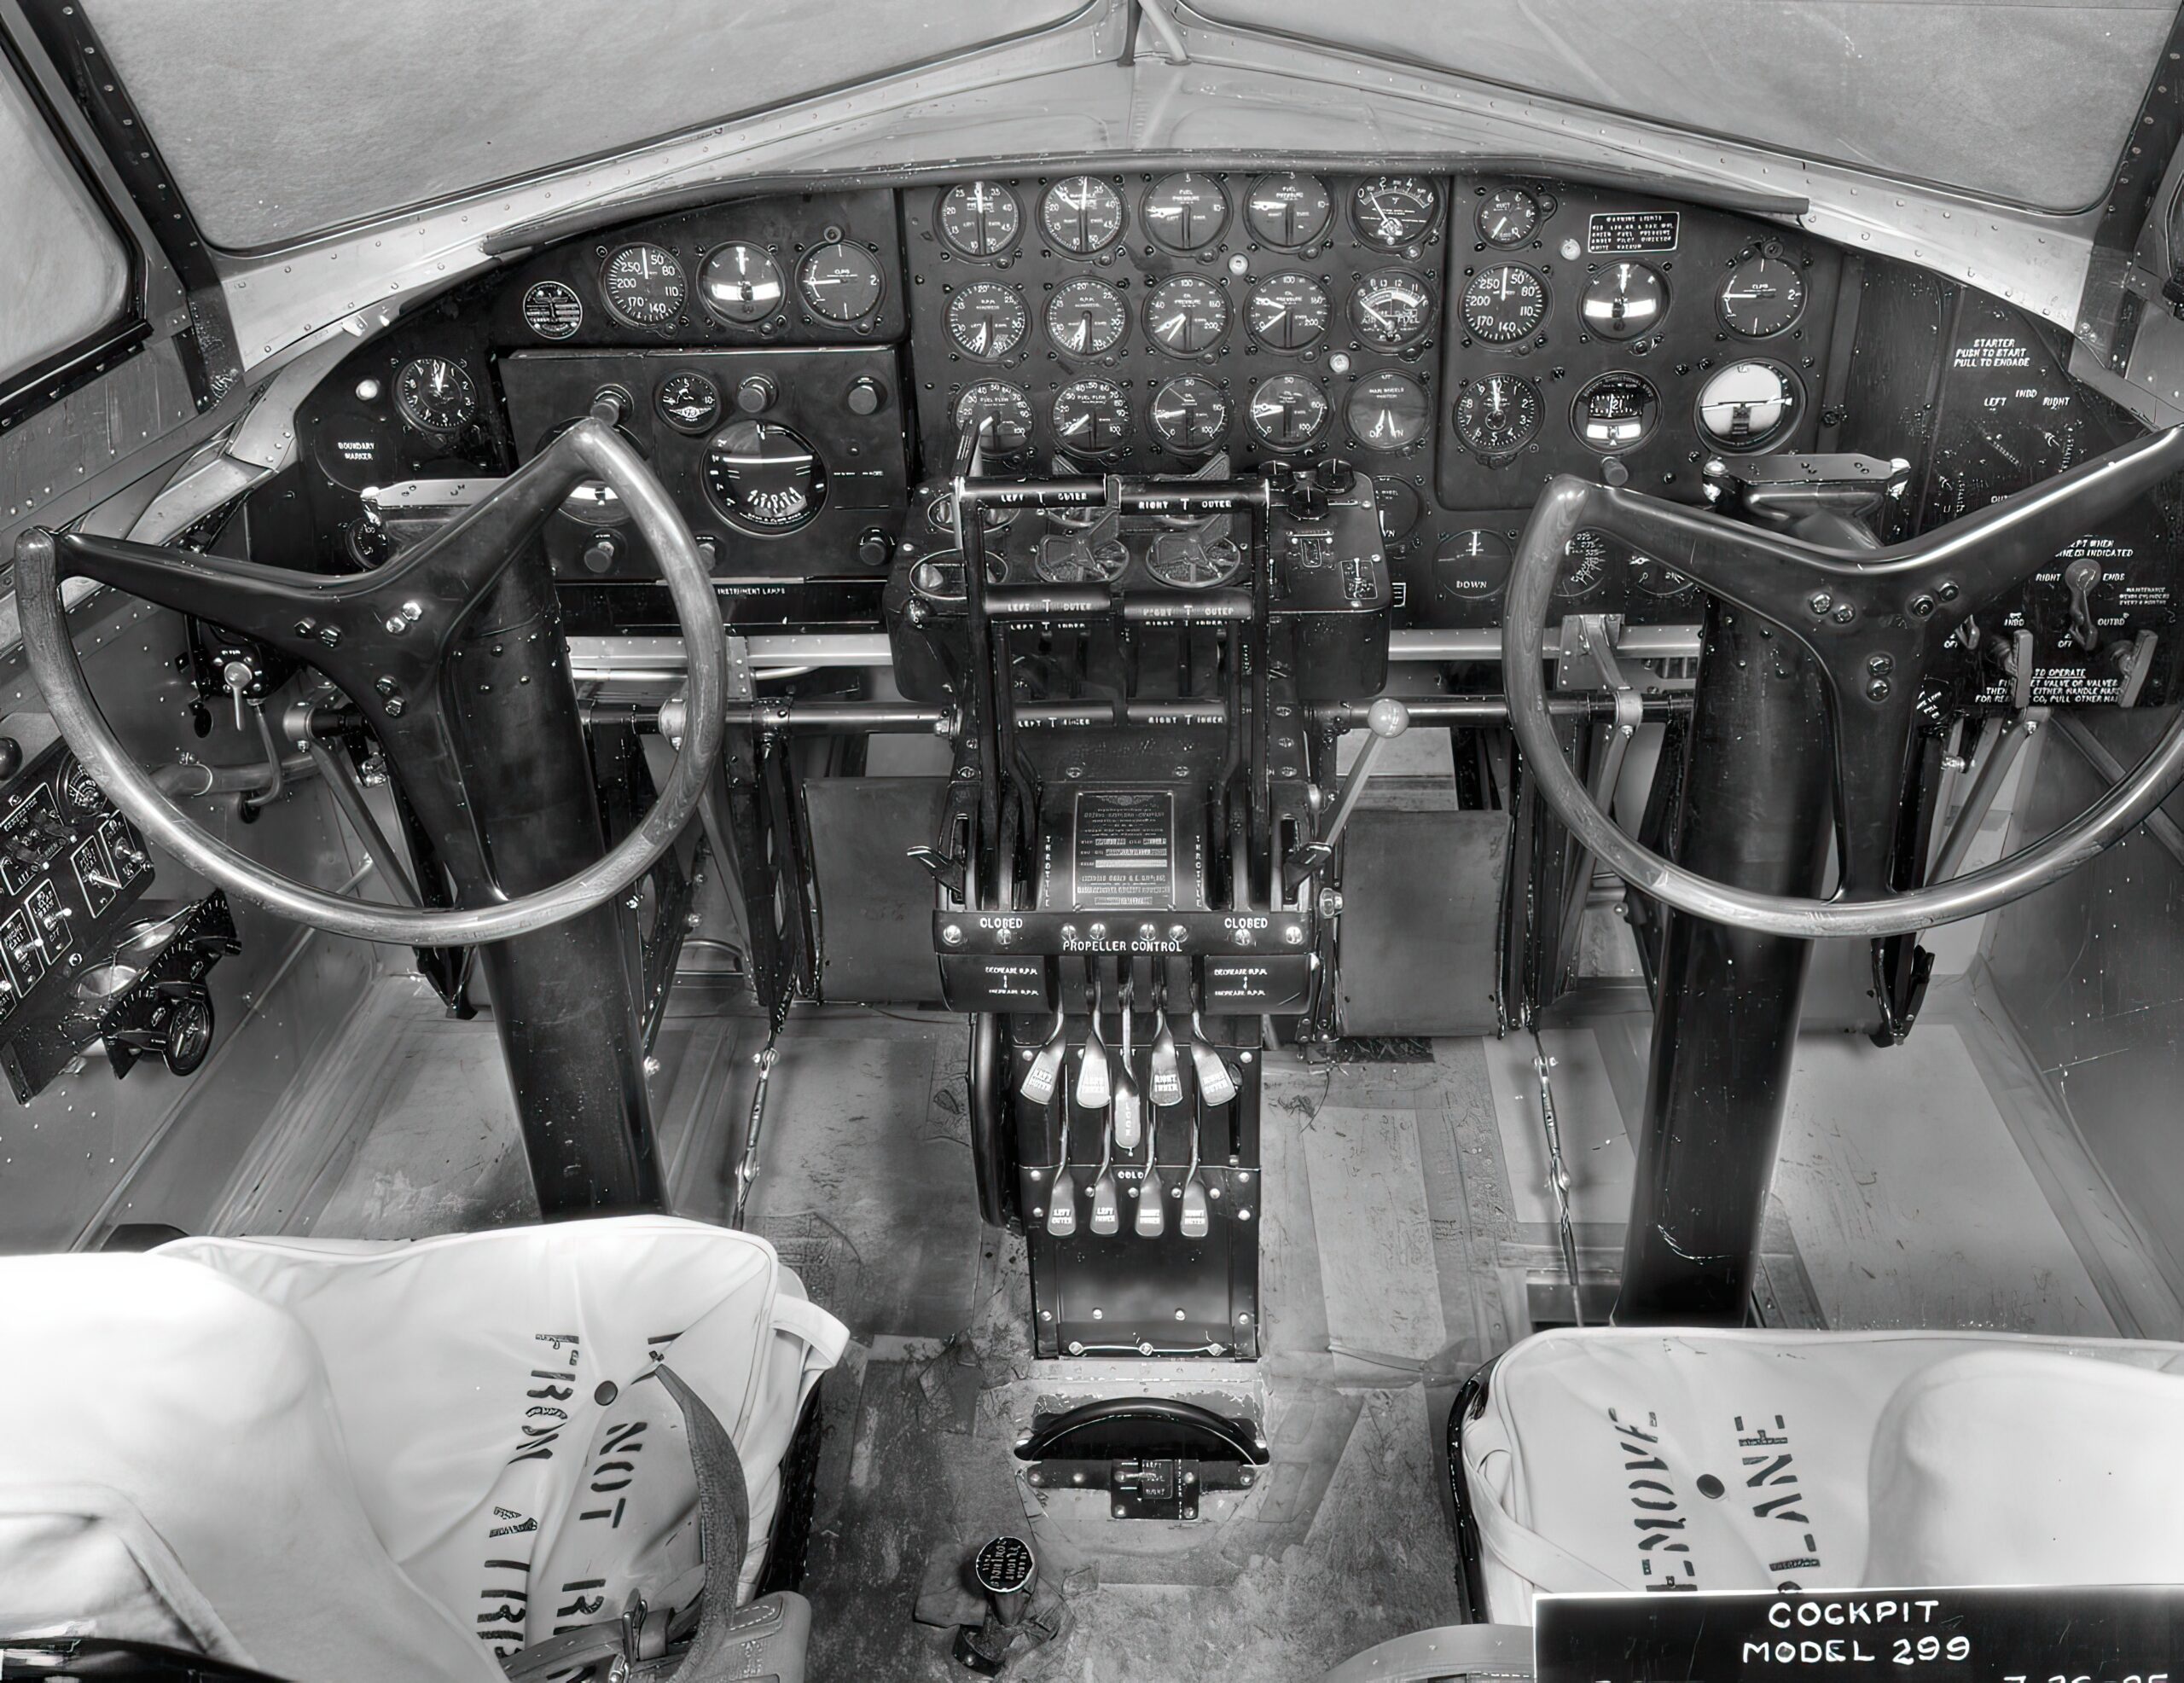 Boeing XB-17 (Model 299) cockpit